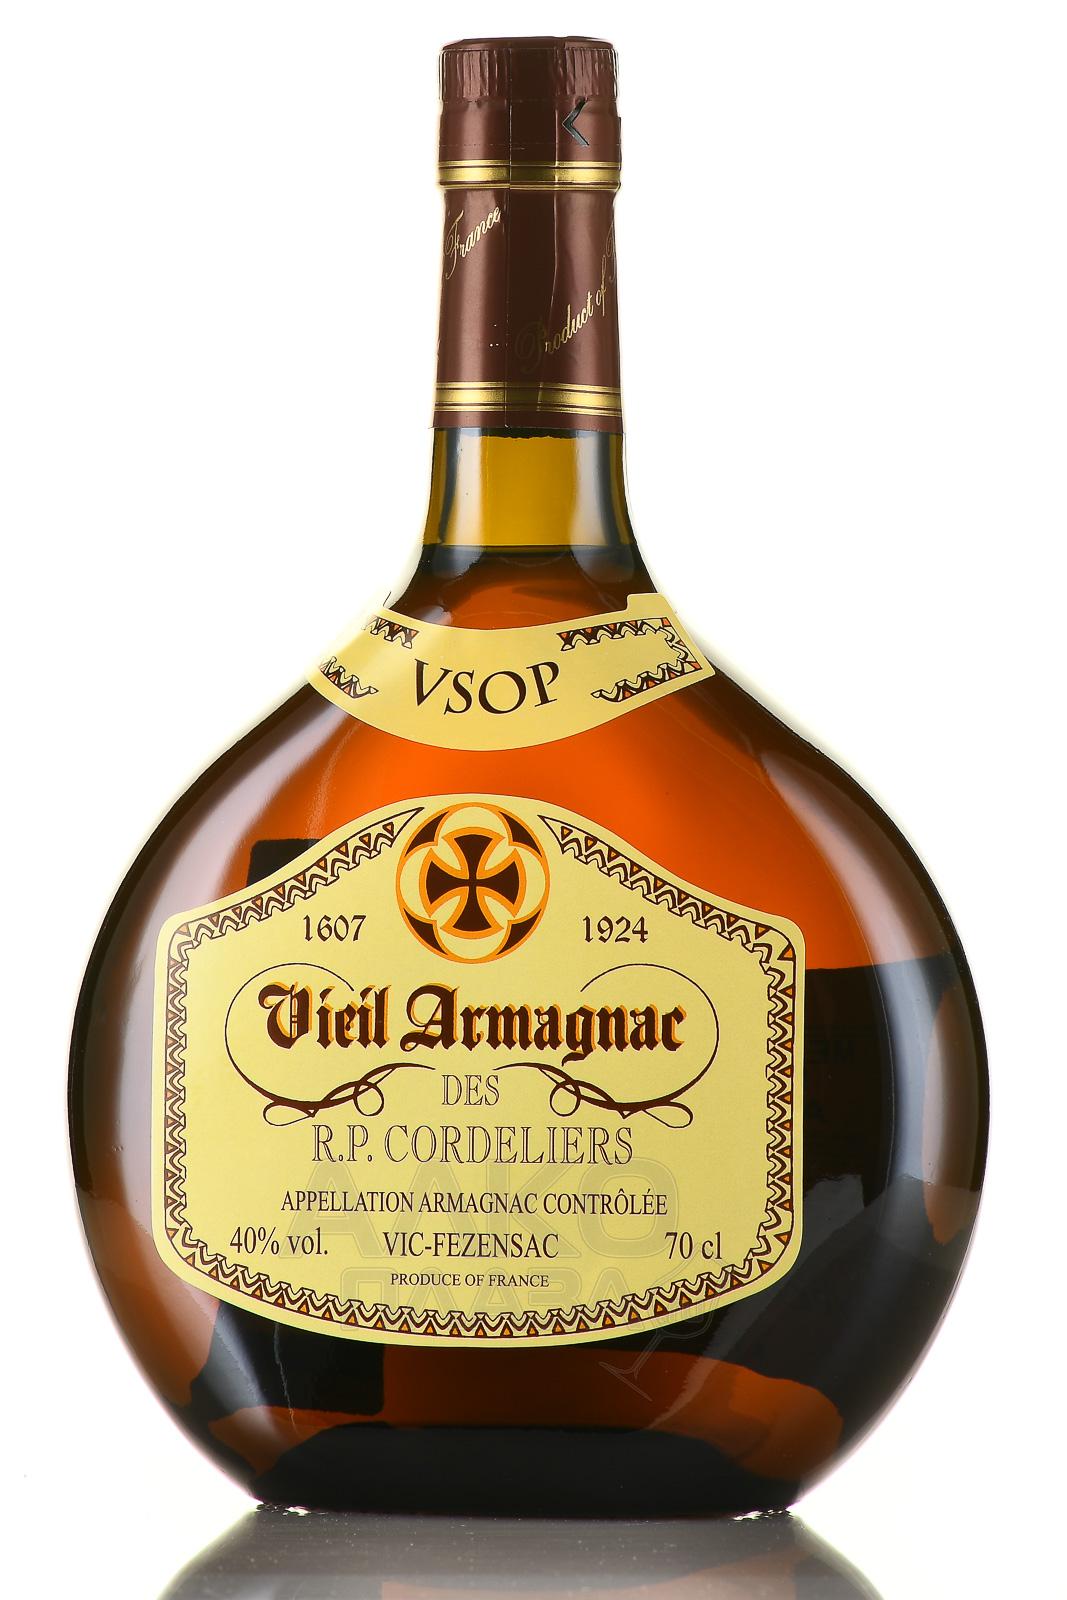 Vieil Armagnac des R.P. Cordeliers VSOP - Вьей Арманьяк де Р.П. Корделье ВСОП 0.7 л